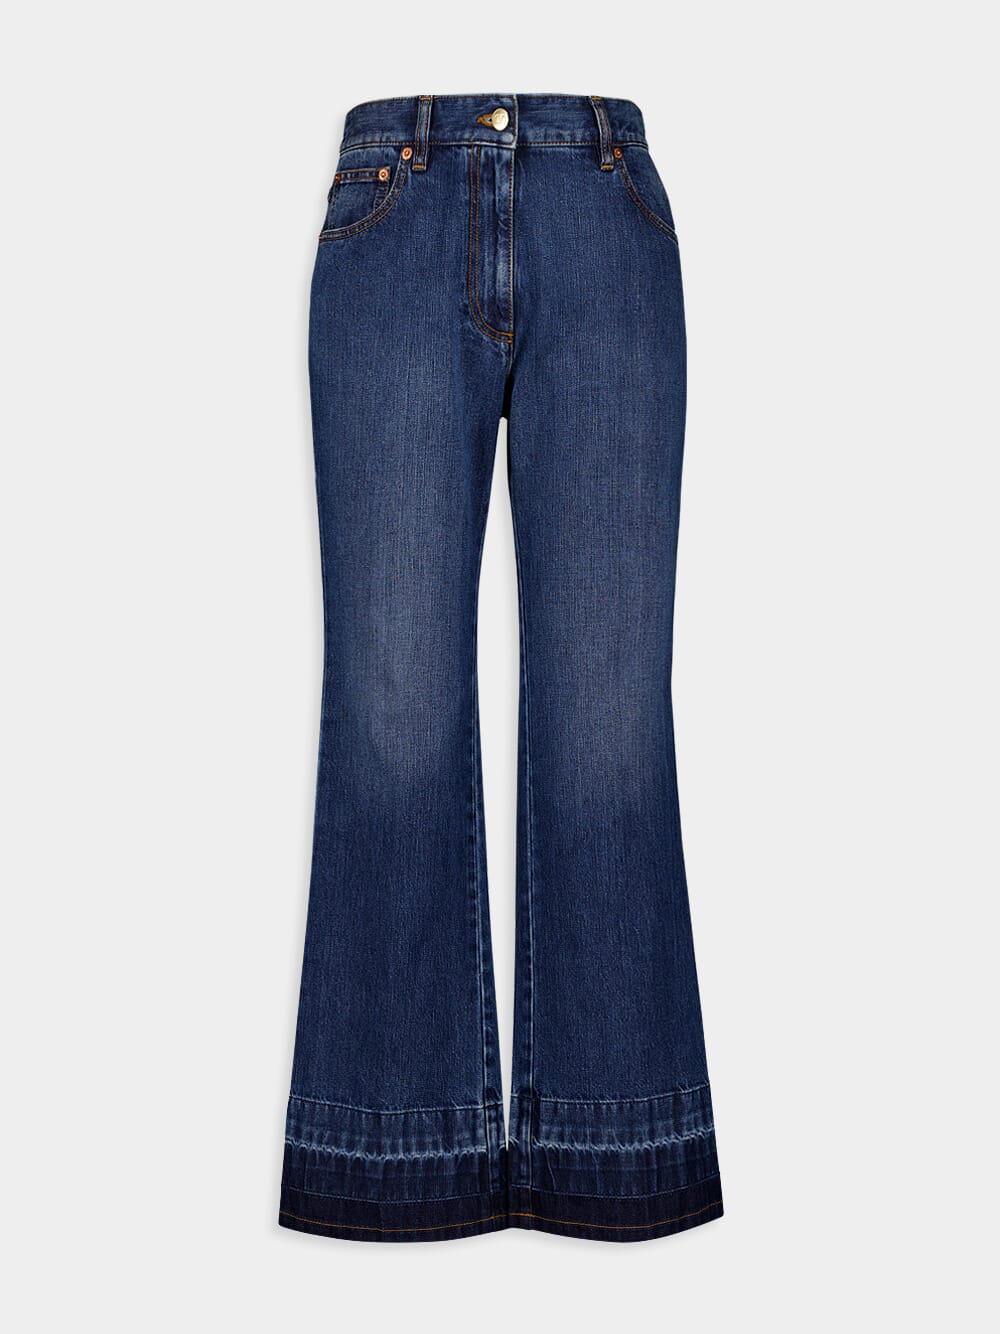 V-Gold Detail Bootcut Jeans